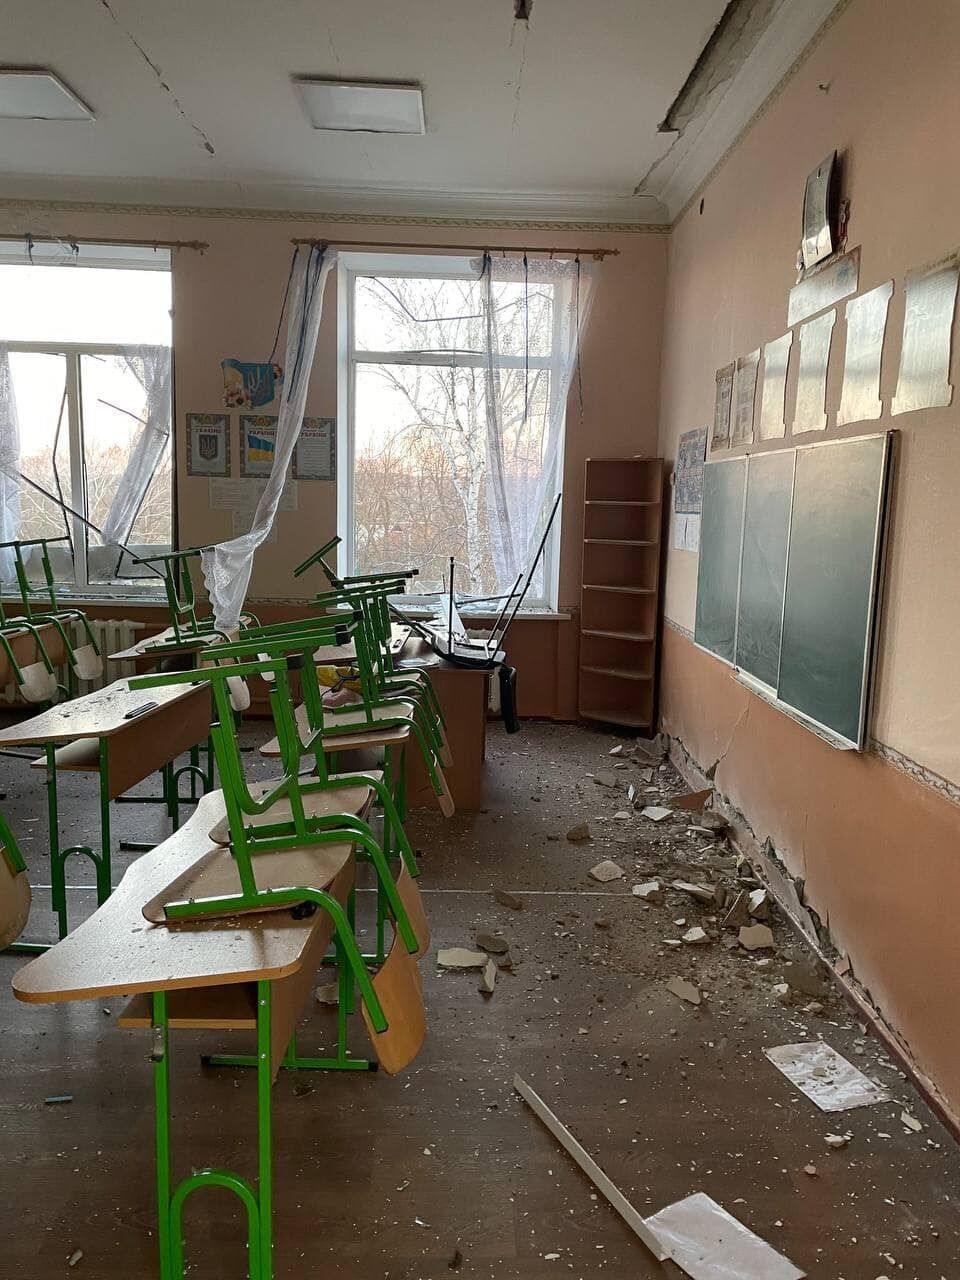 Войска РФ ударили ракетами по школе в Краматорске, где обустроили "пункт несокрушимости". Фото и видео